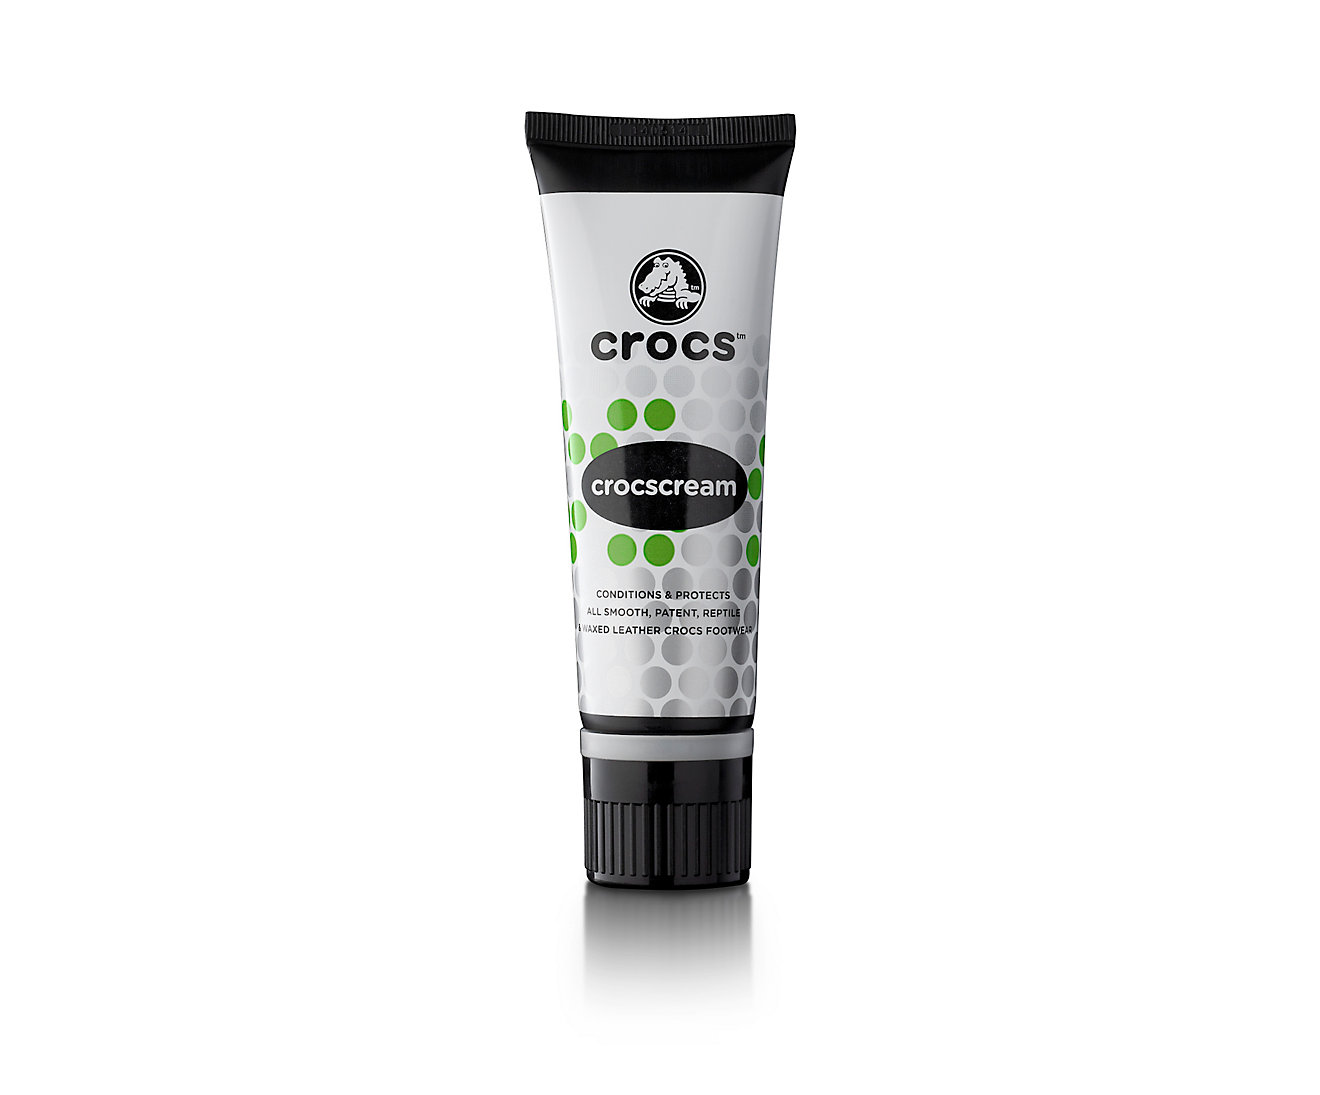 Crocs Cream